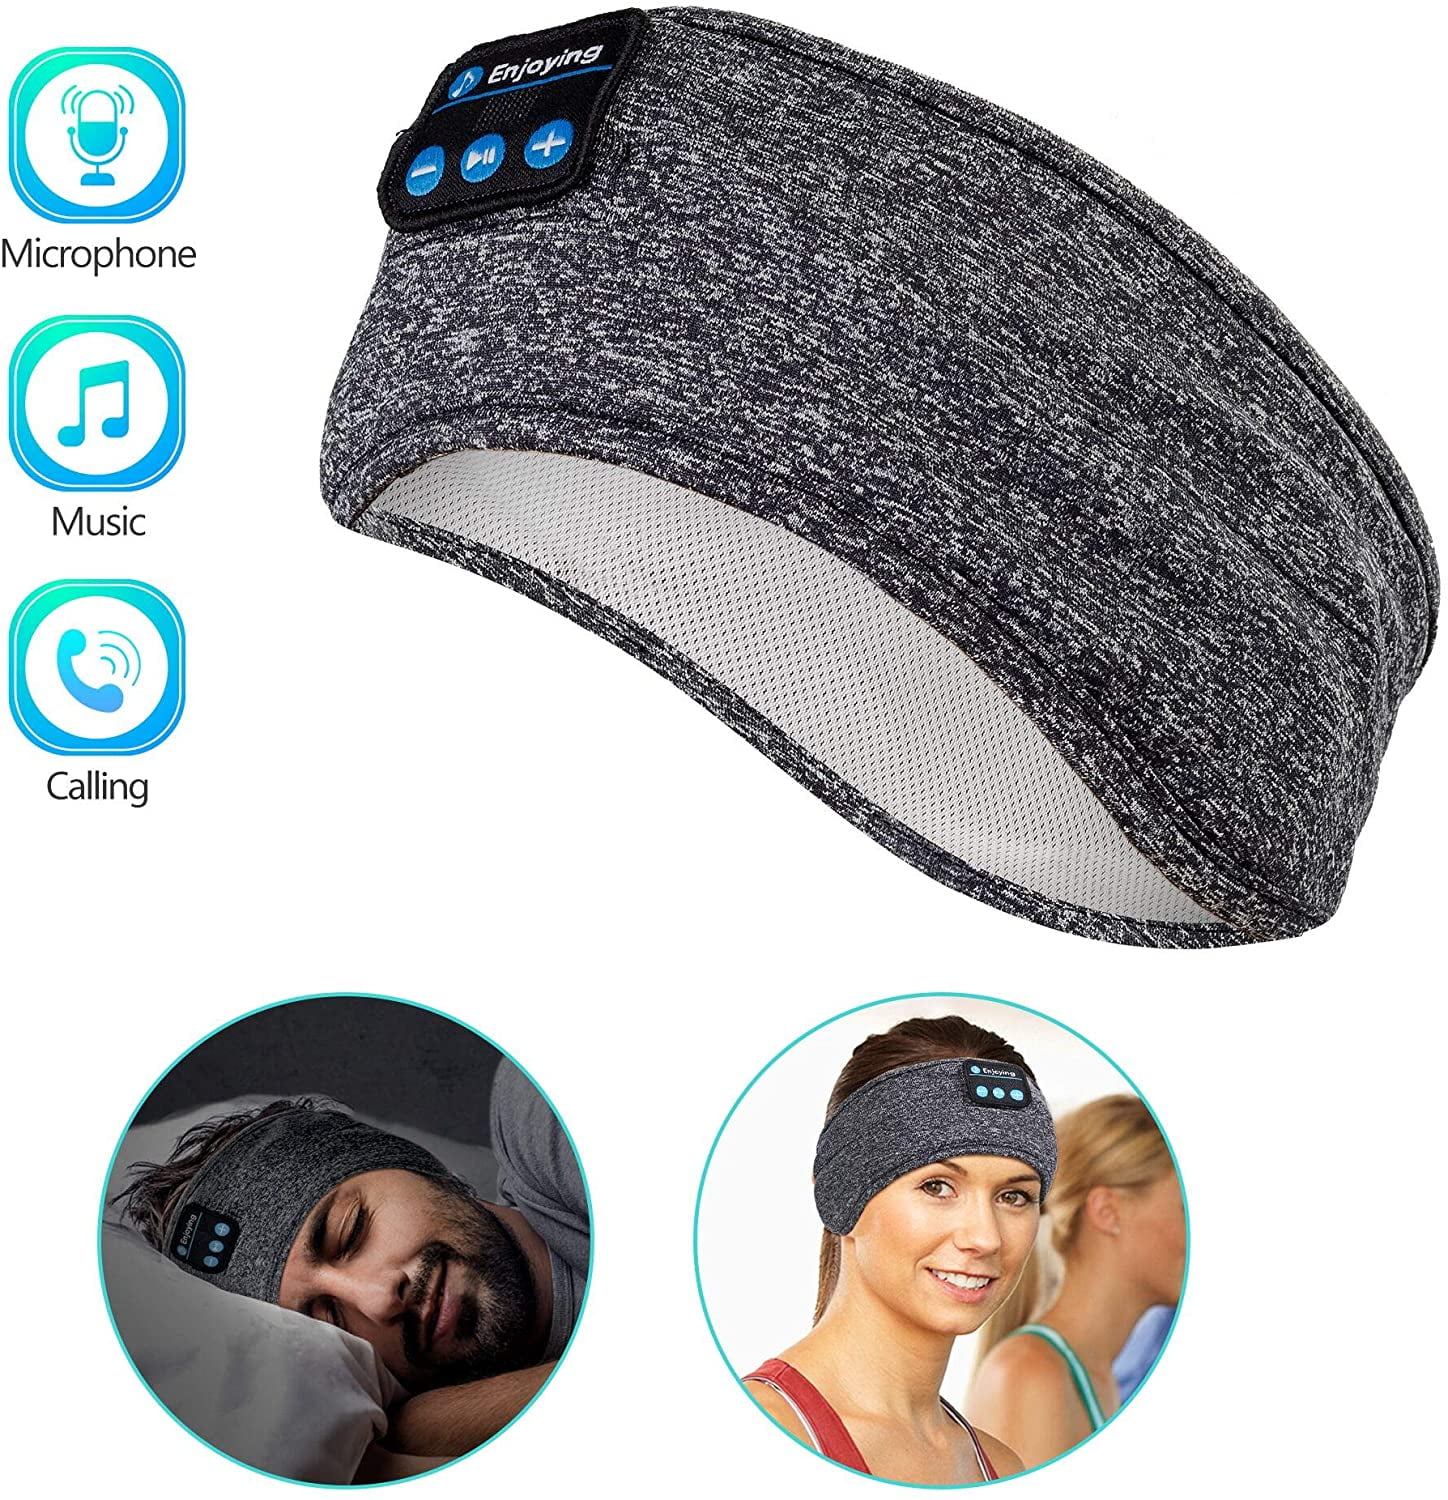 Navly Sleep Headphones Bluetooth Headband Sleeping Headphones for Workout Running Yoga Sports Gift for Men Women Wireless Headband Headphones Headsets with Thin Speakers Sleep Earbuds 